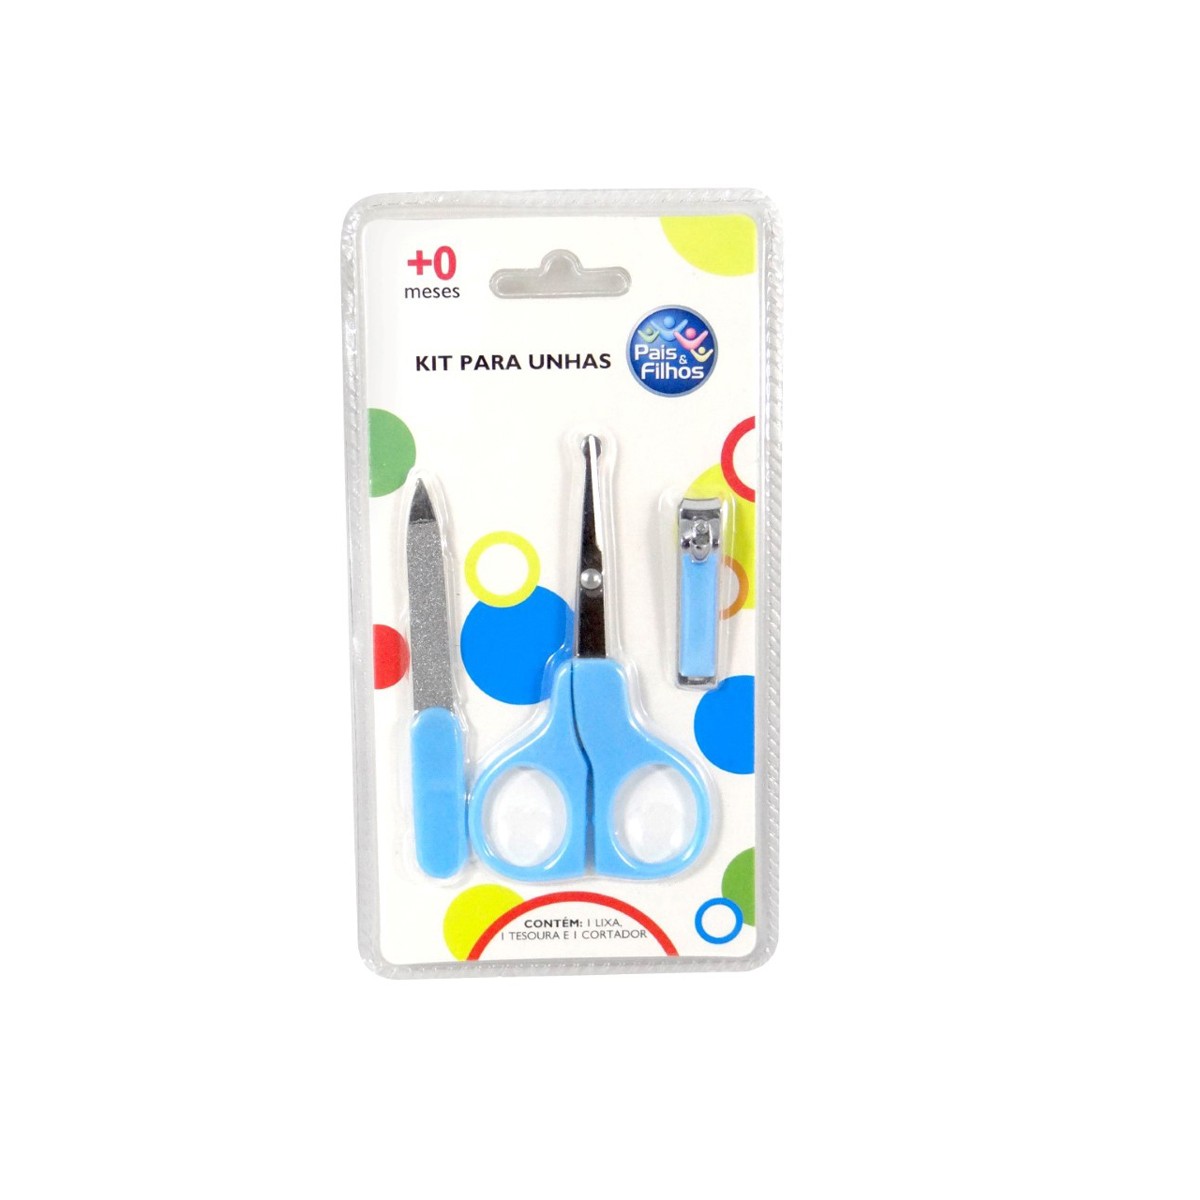 Kit para unhas com lixa,tesoura,cortador em azul-7794-65059